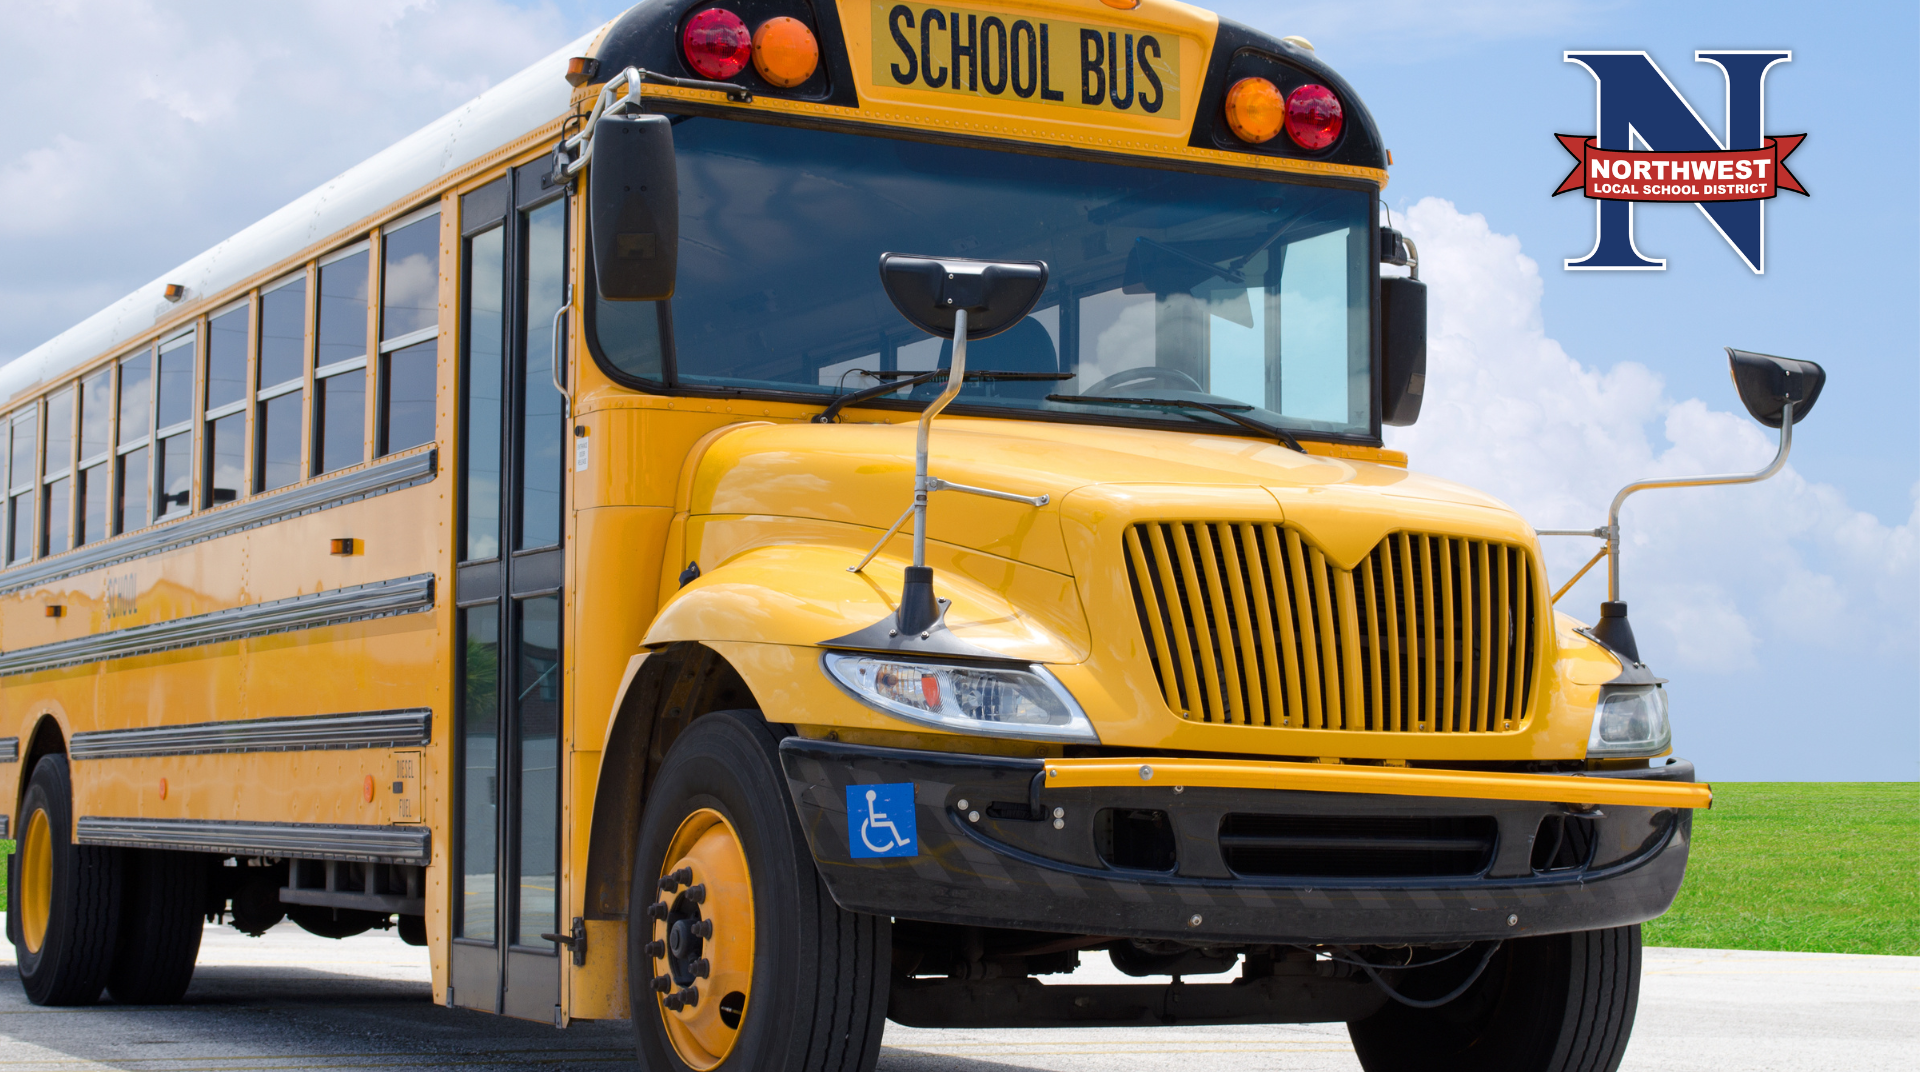 School Bus, Northwest Local School District Logo